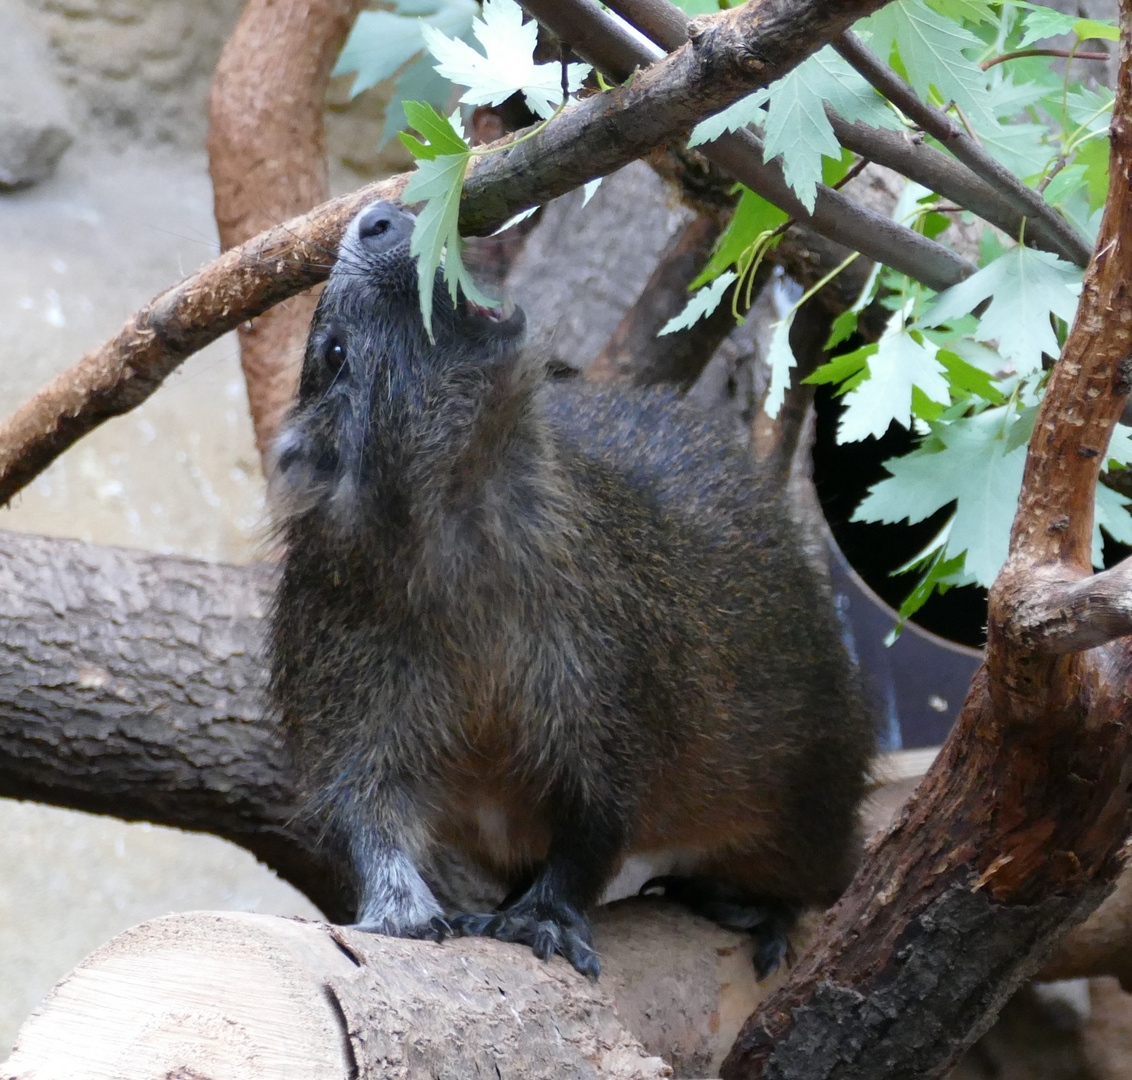 Kuba-Baumratte in Duisburger Zoo